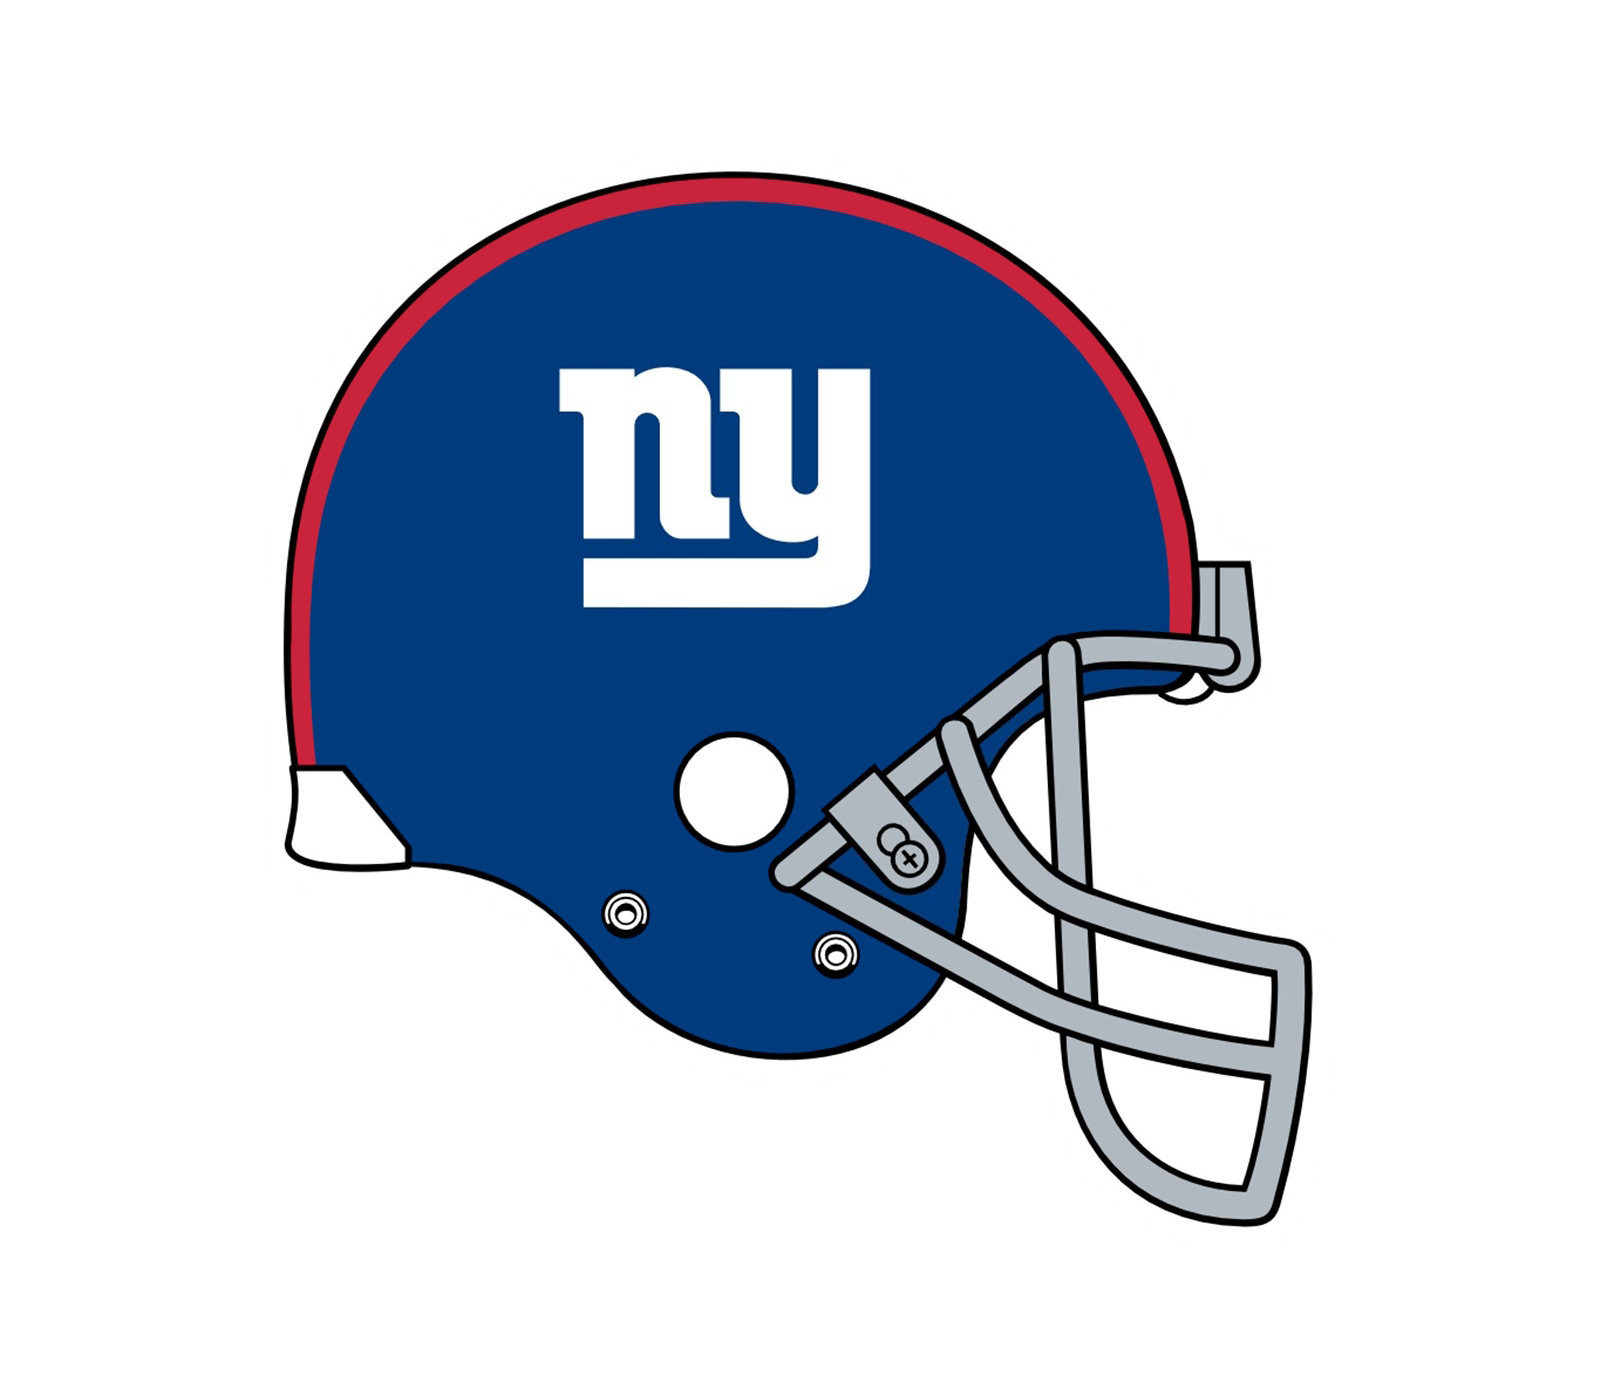 New York Giants PNG Image File